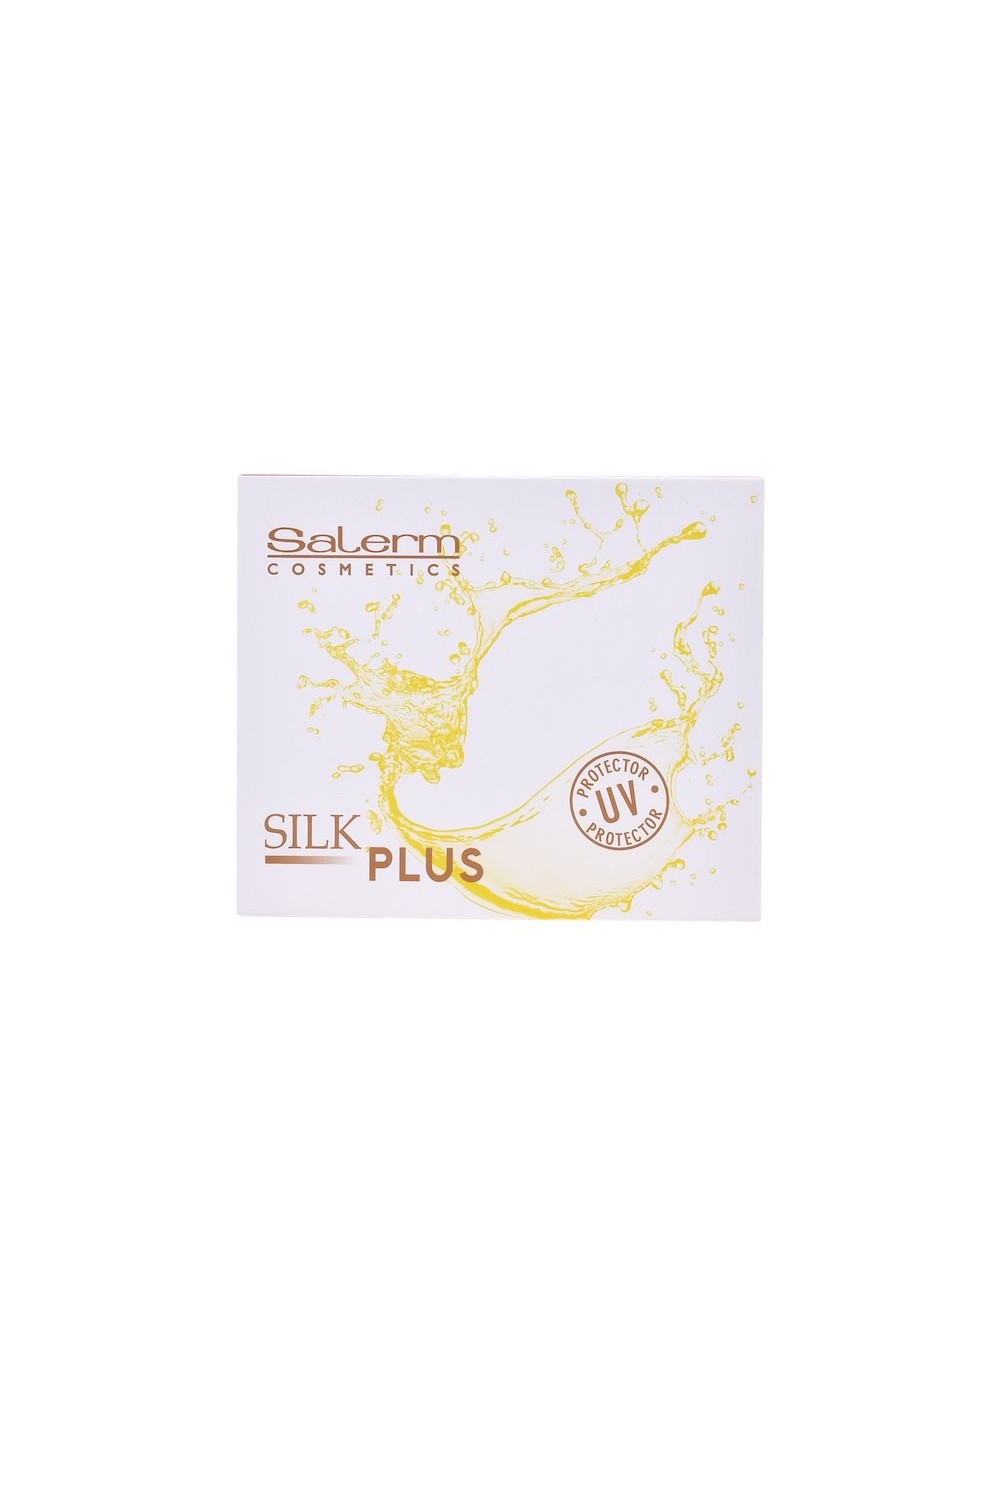 Salerm Cosmetics Silk Plus 12*5ml